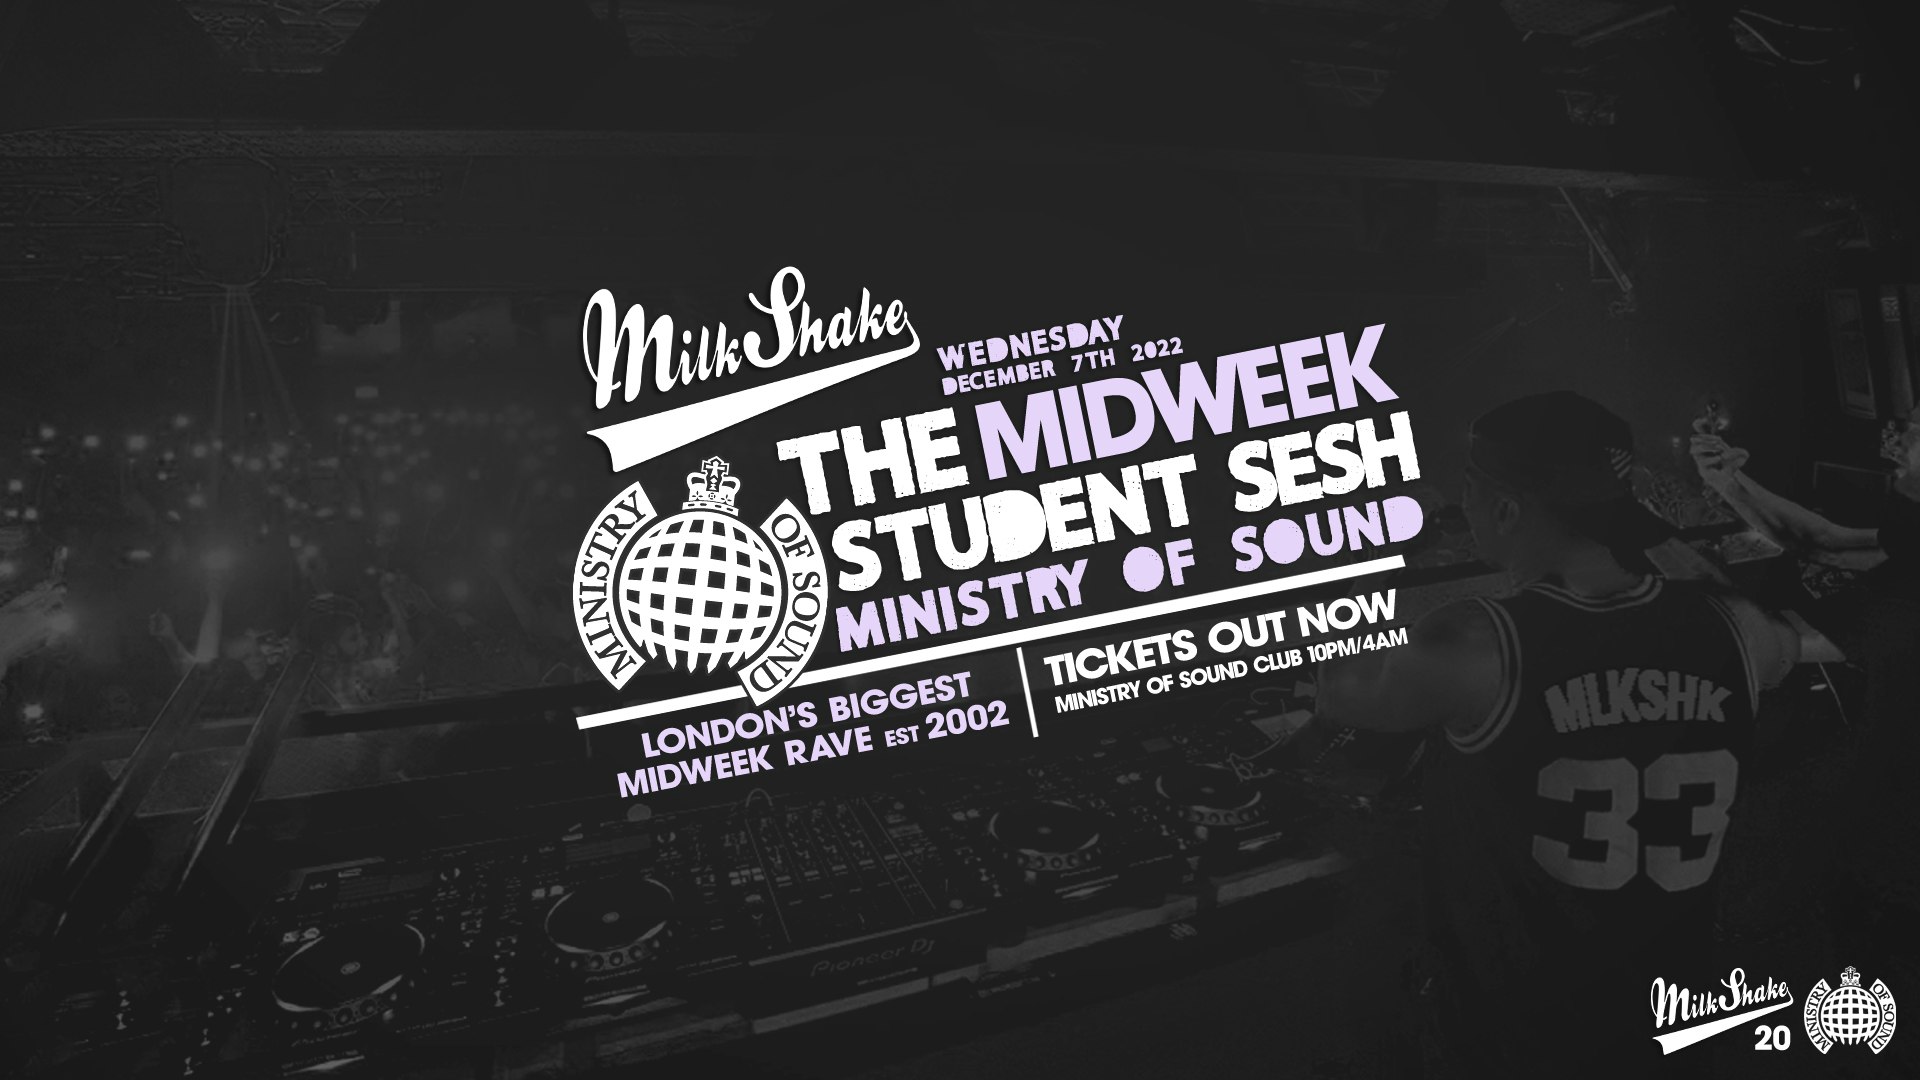 Milkshake, Ministry of Sound | London’s Biggest Student Night 🔥 December 7th 🌍